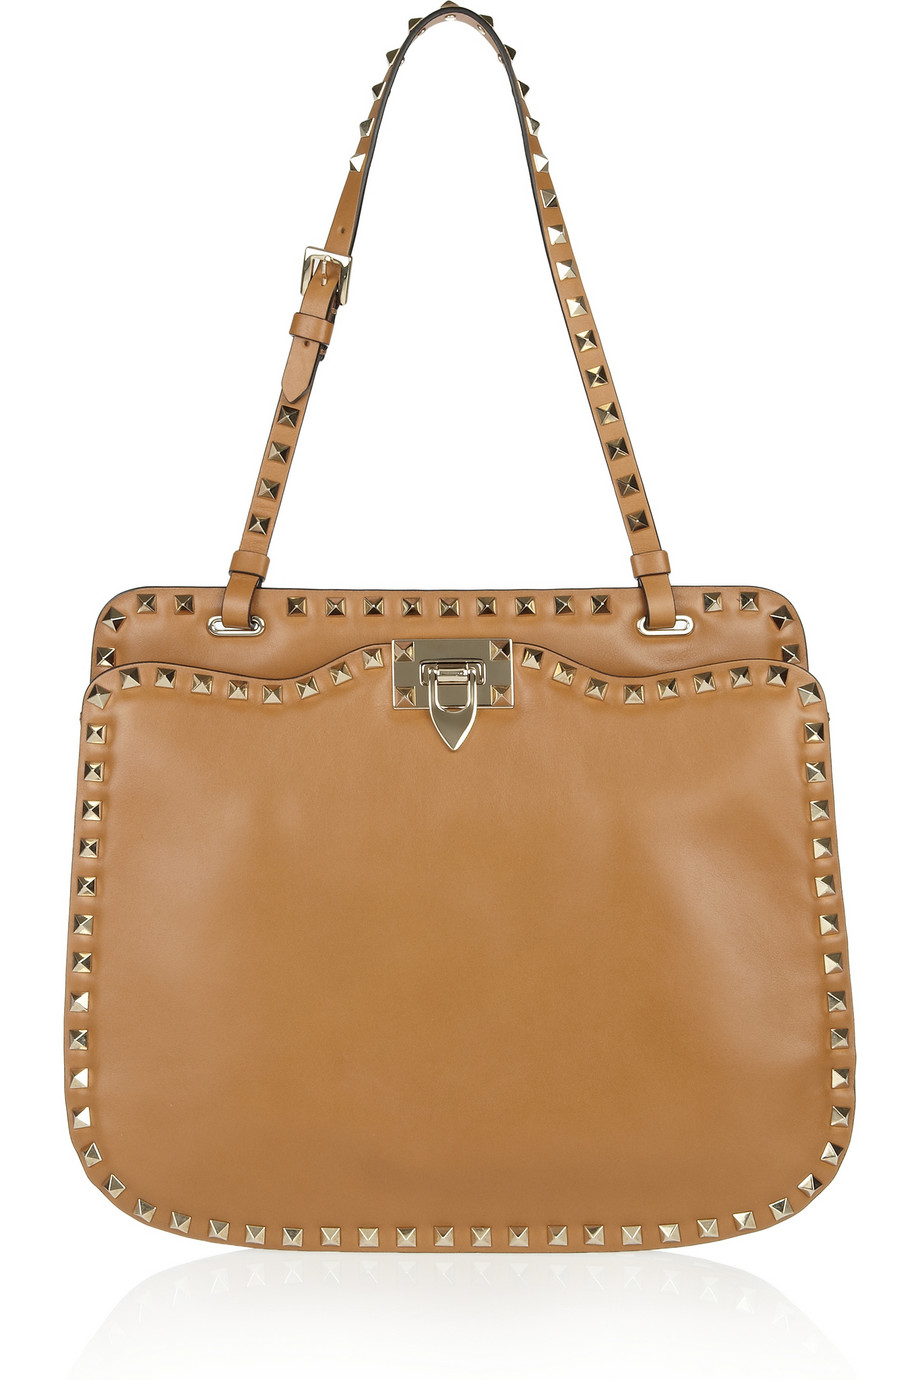 Valentino Valentino Garavani Lock Small Leather Shoulder Bag in Tan (Natural) - Lyst